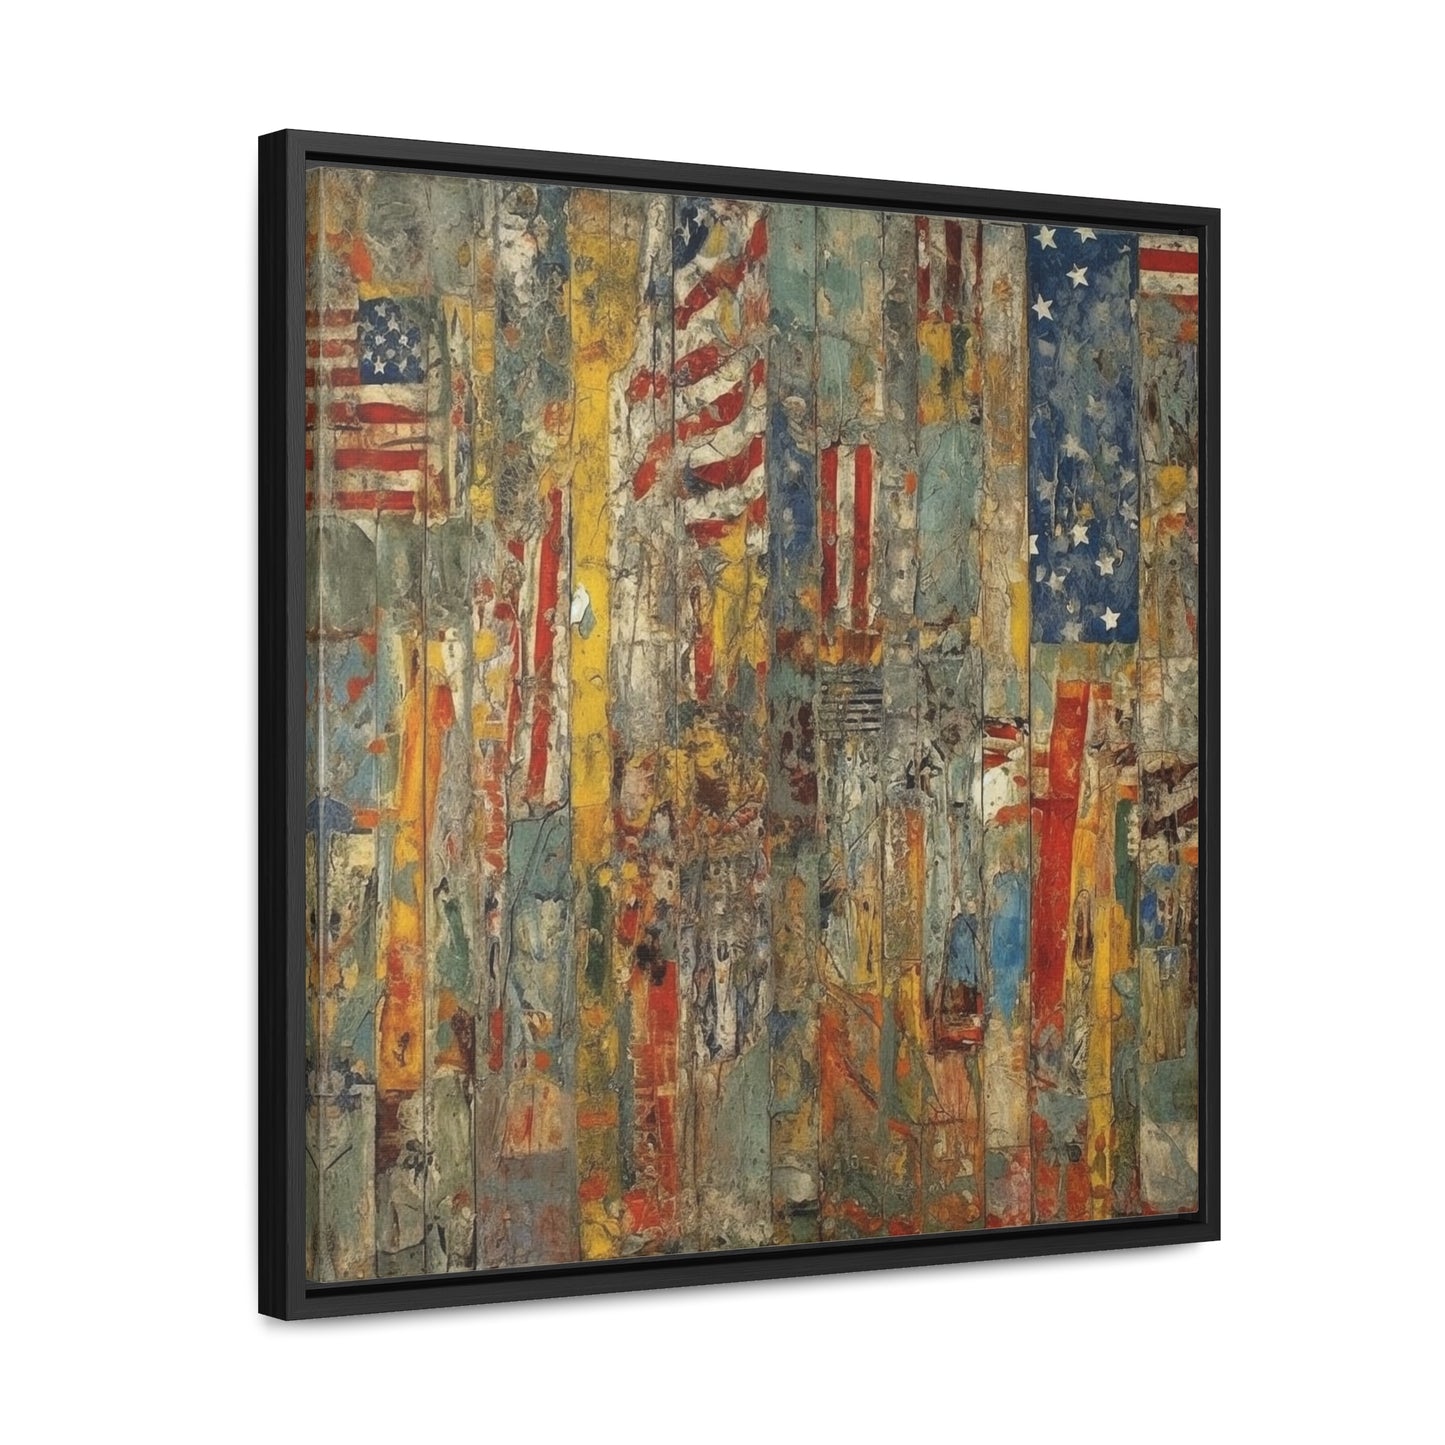 USA 13, Gallery Canvas Wraps, Square Frame